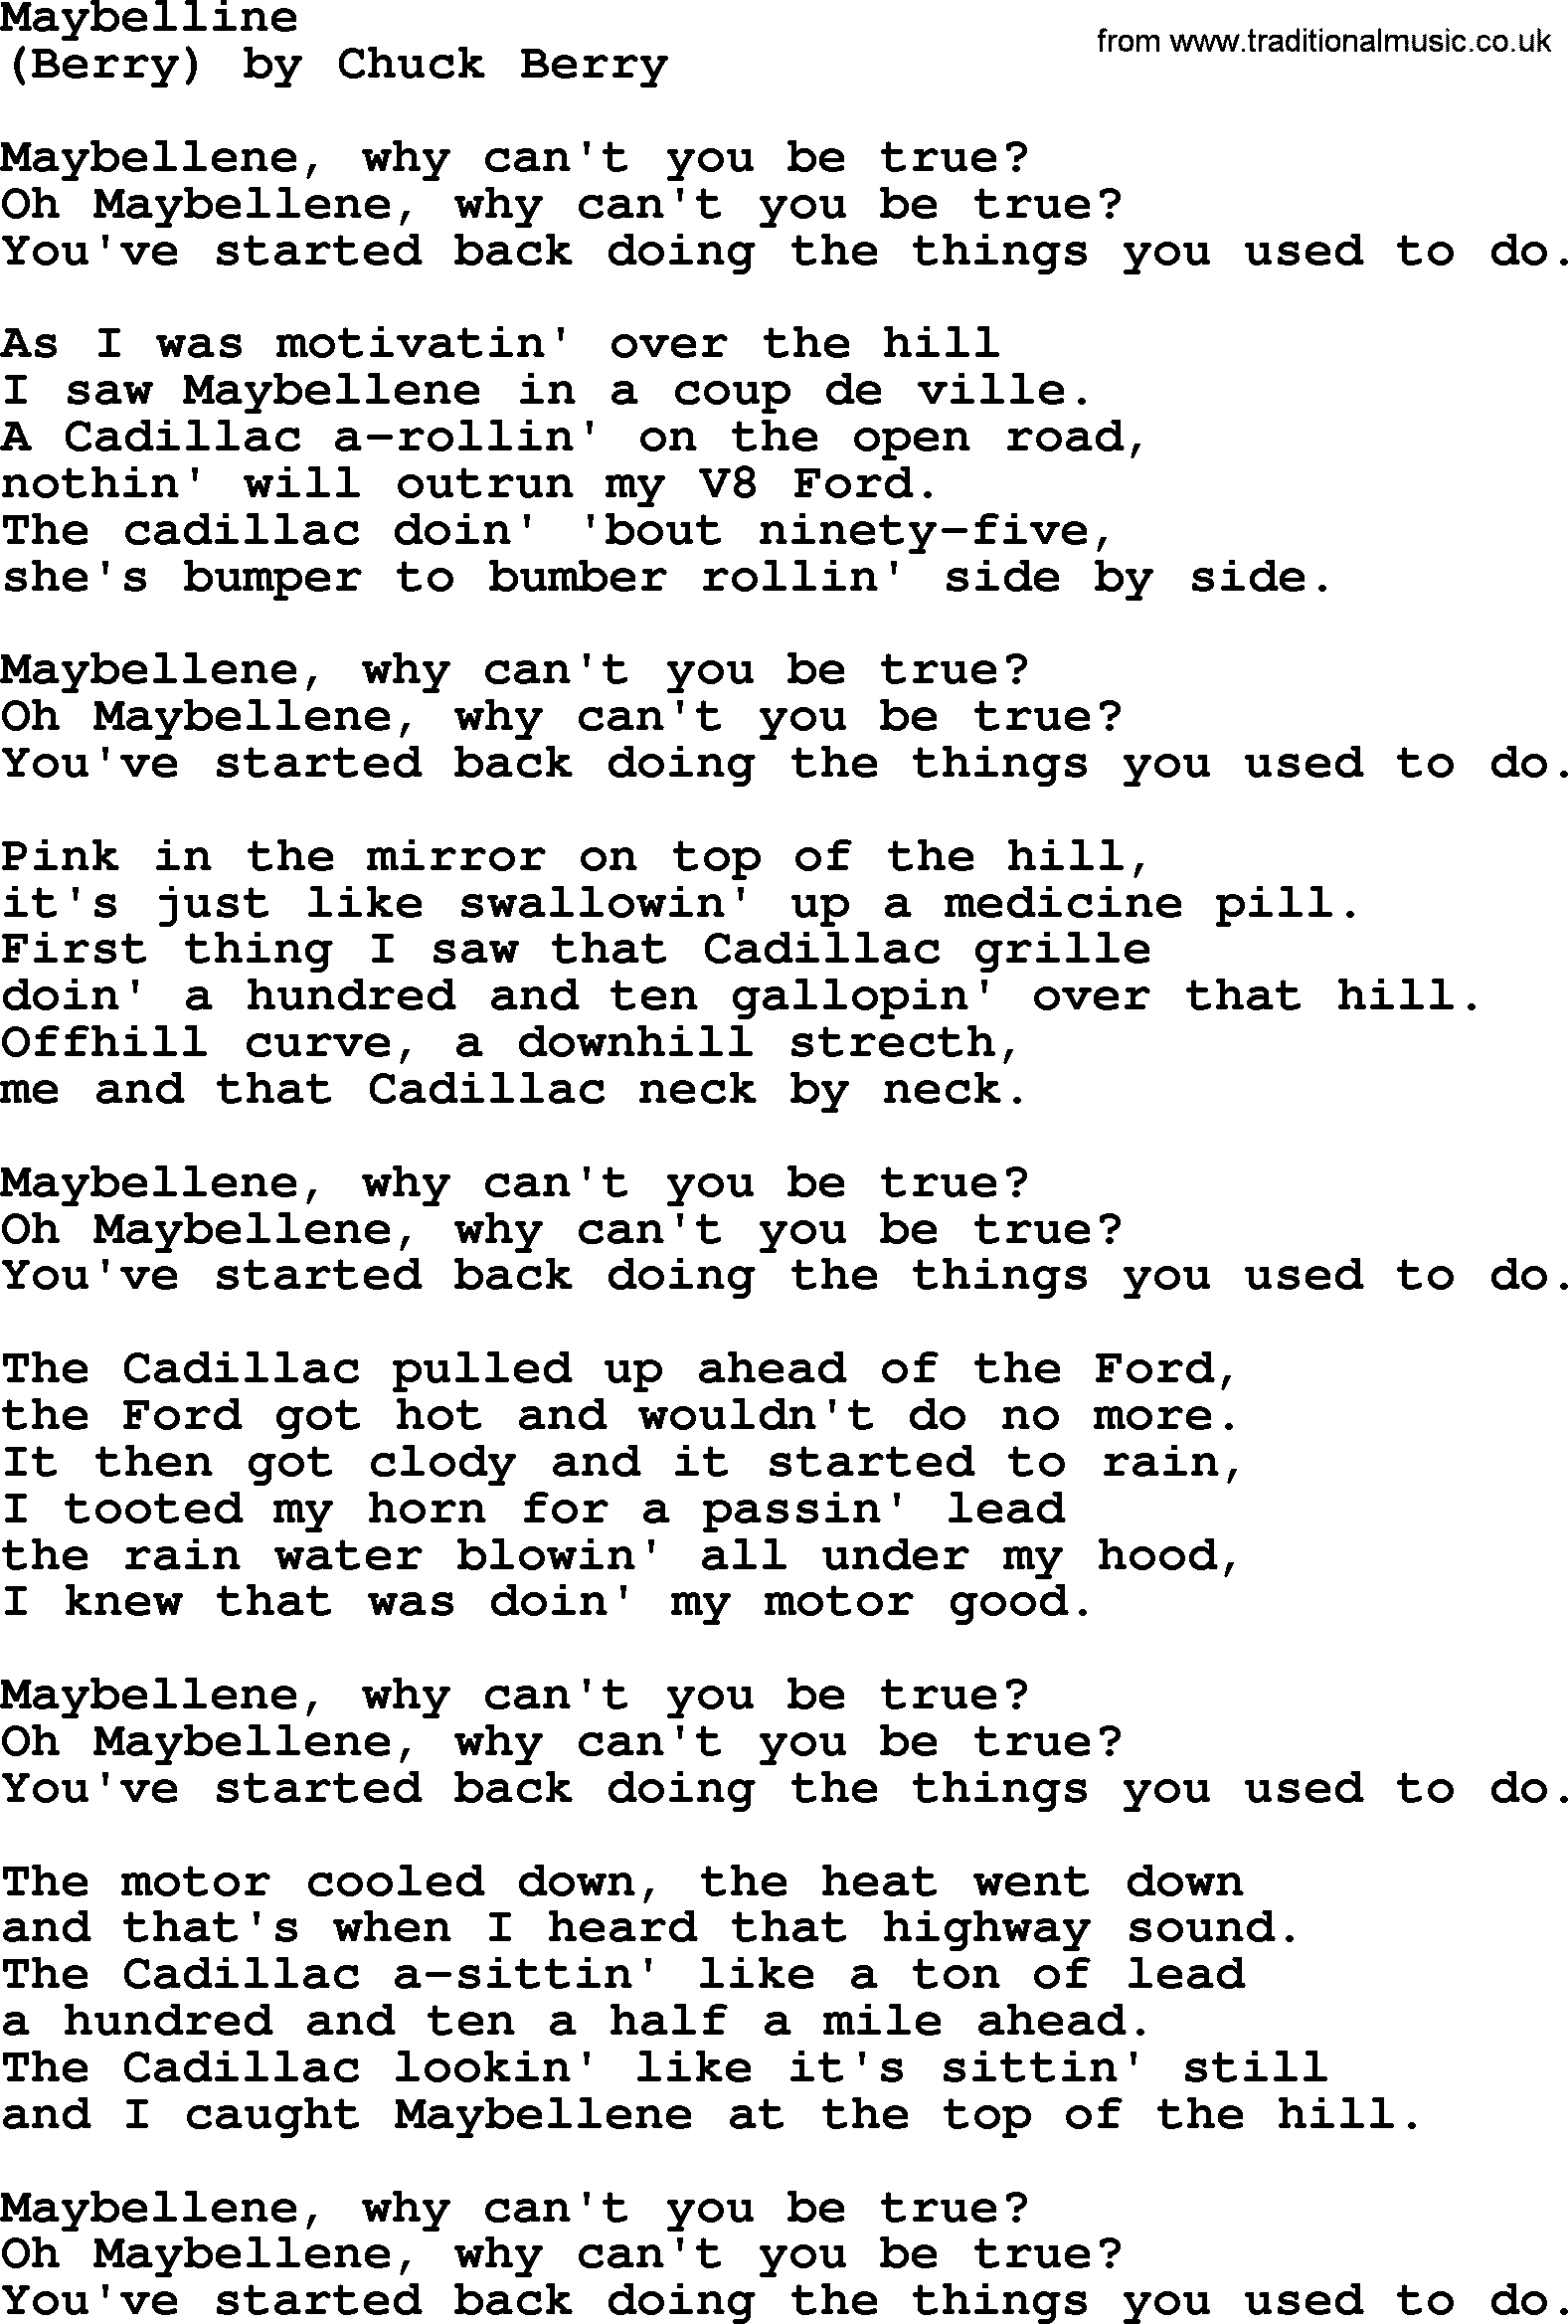 Bruce Springsteen song: Maybelline lyrics